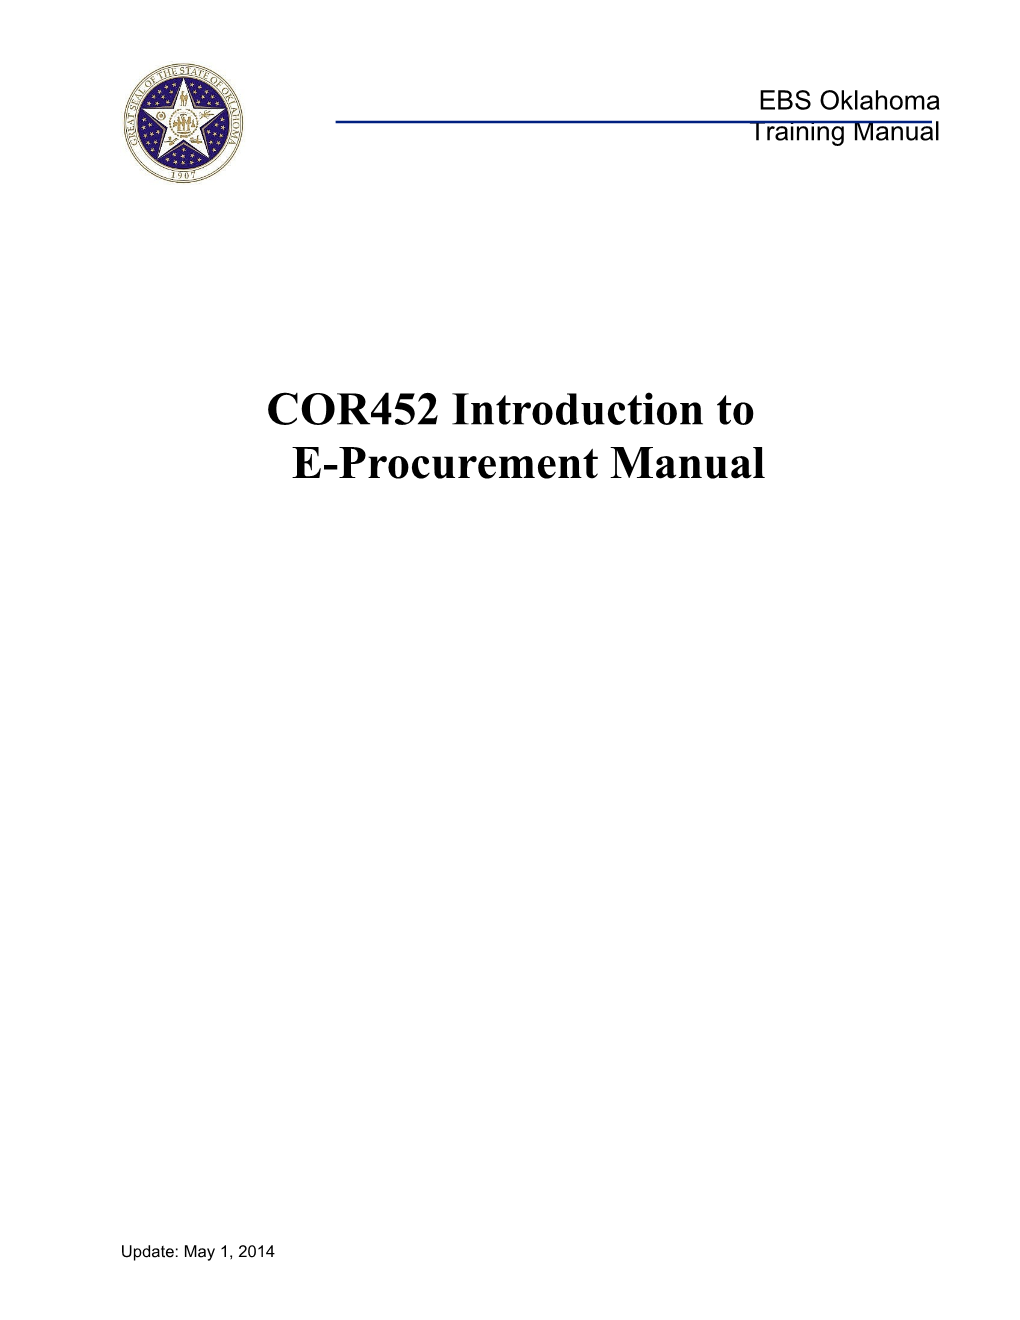 COR452 Introduction to E-Procurement Manual